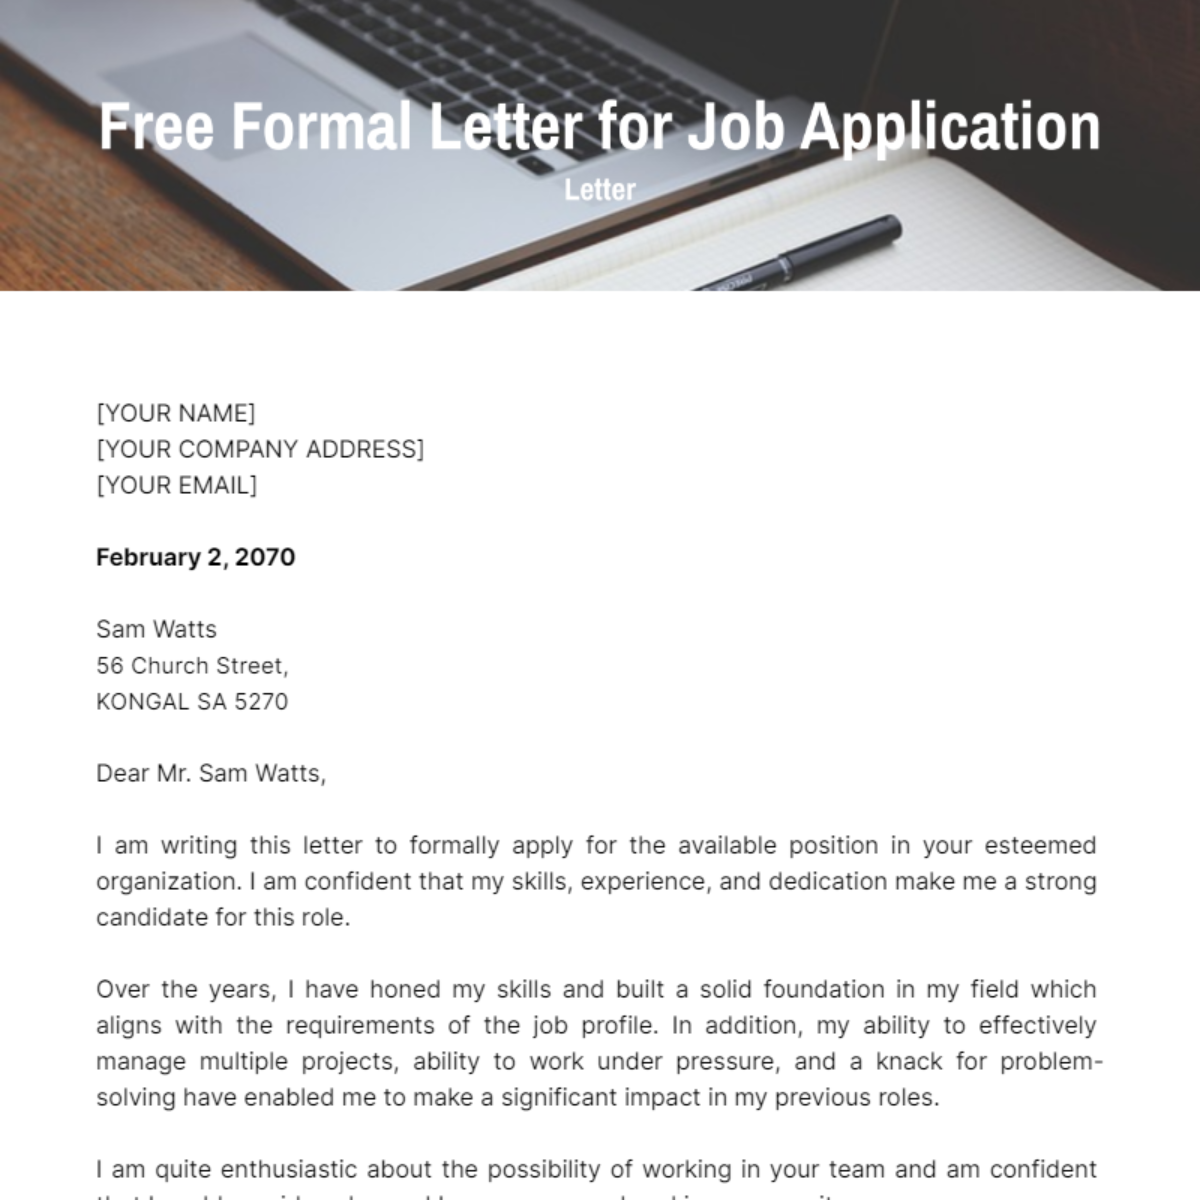 Formal Letter for Job Application Template